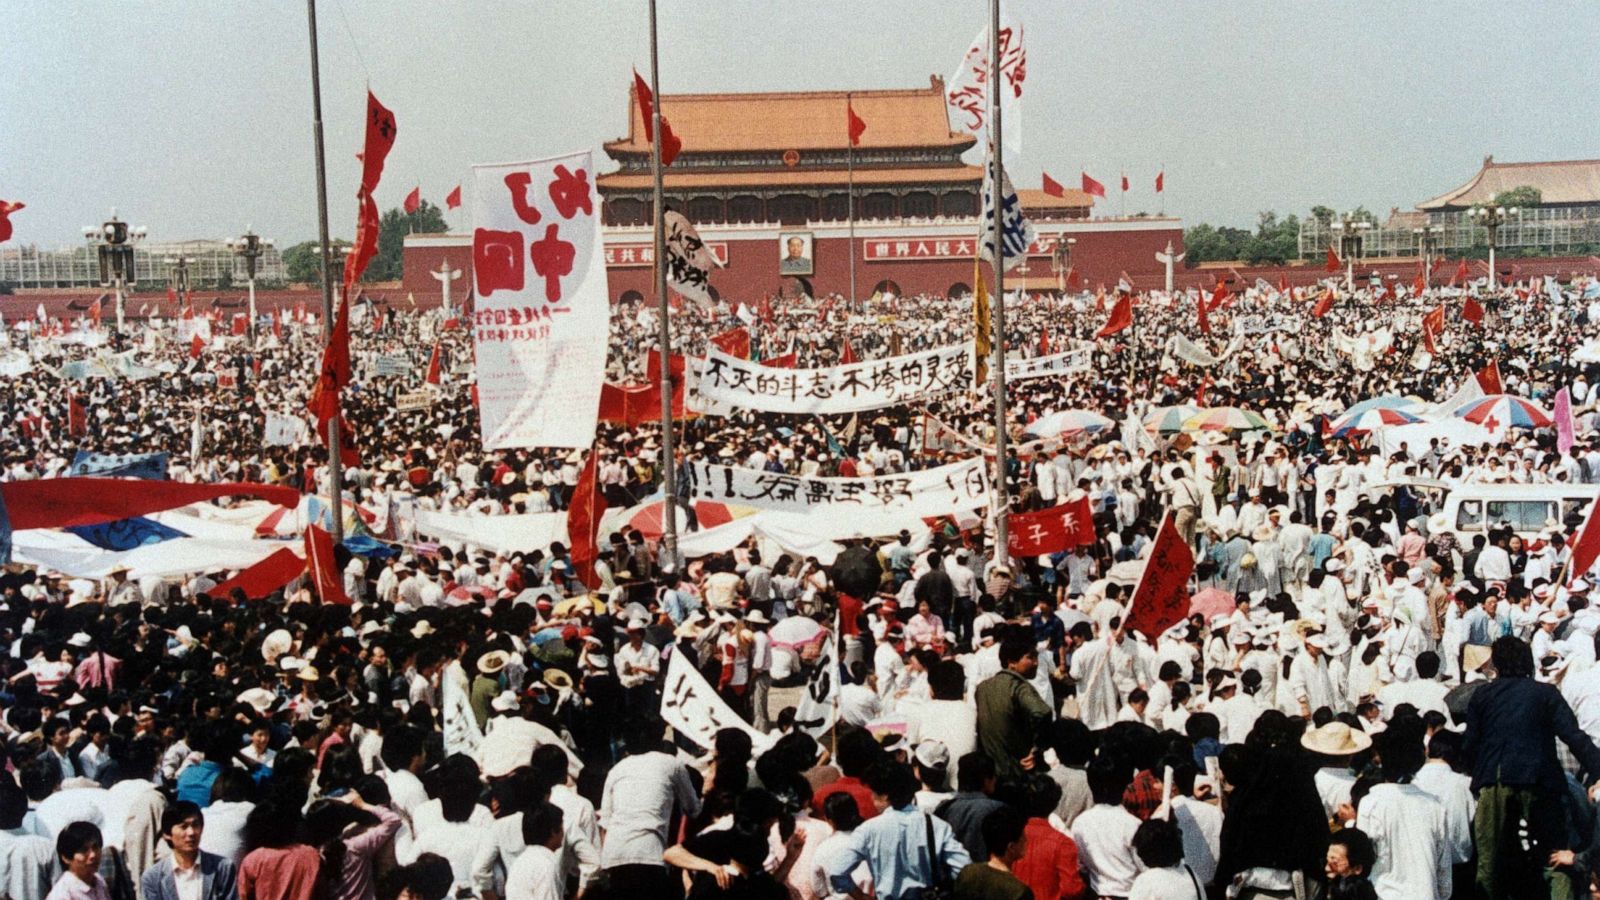 Tiananmen square massacre